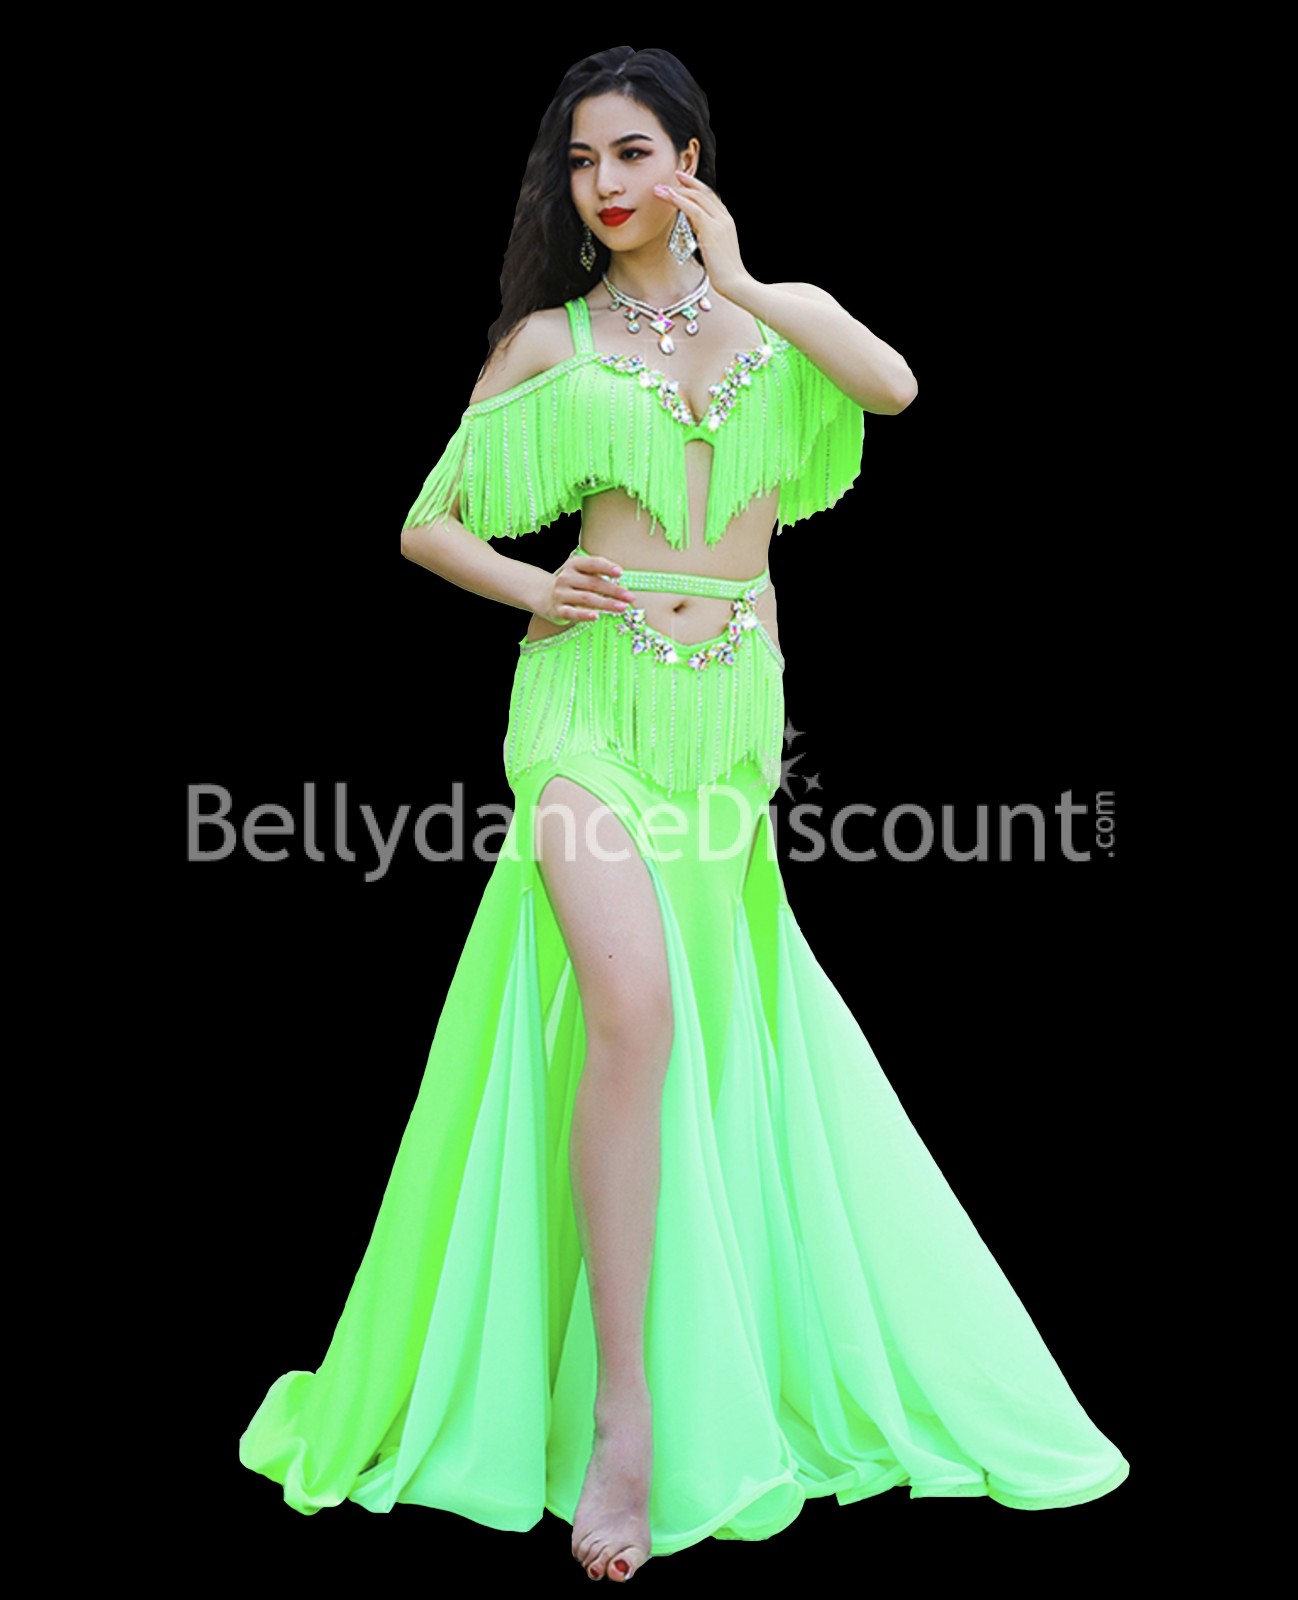 Costume de danse orientale vert d'eau et or